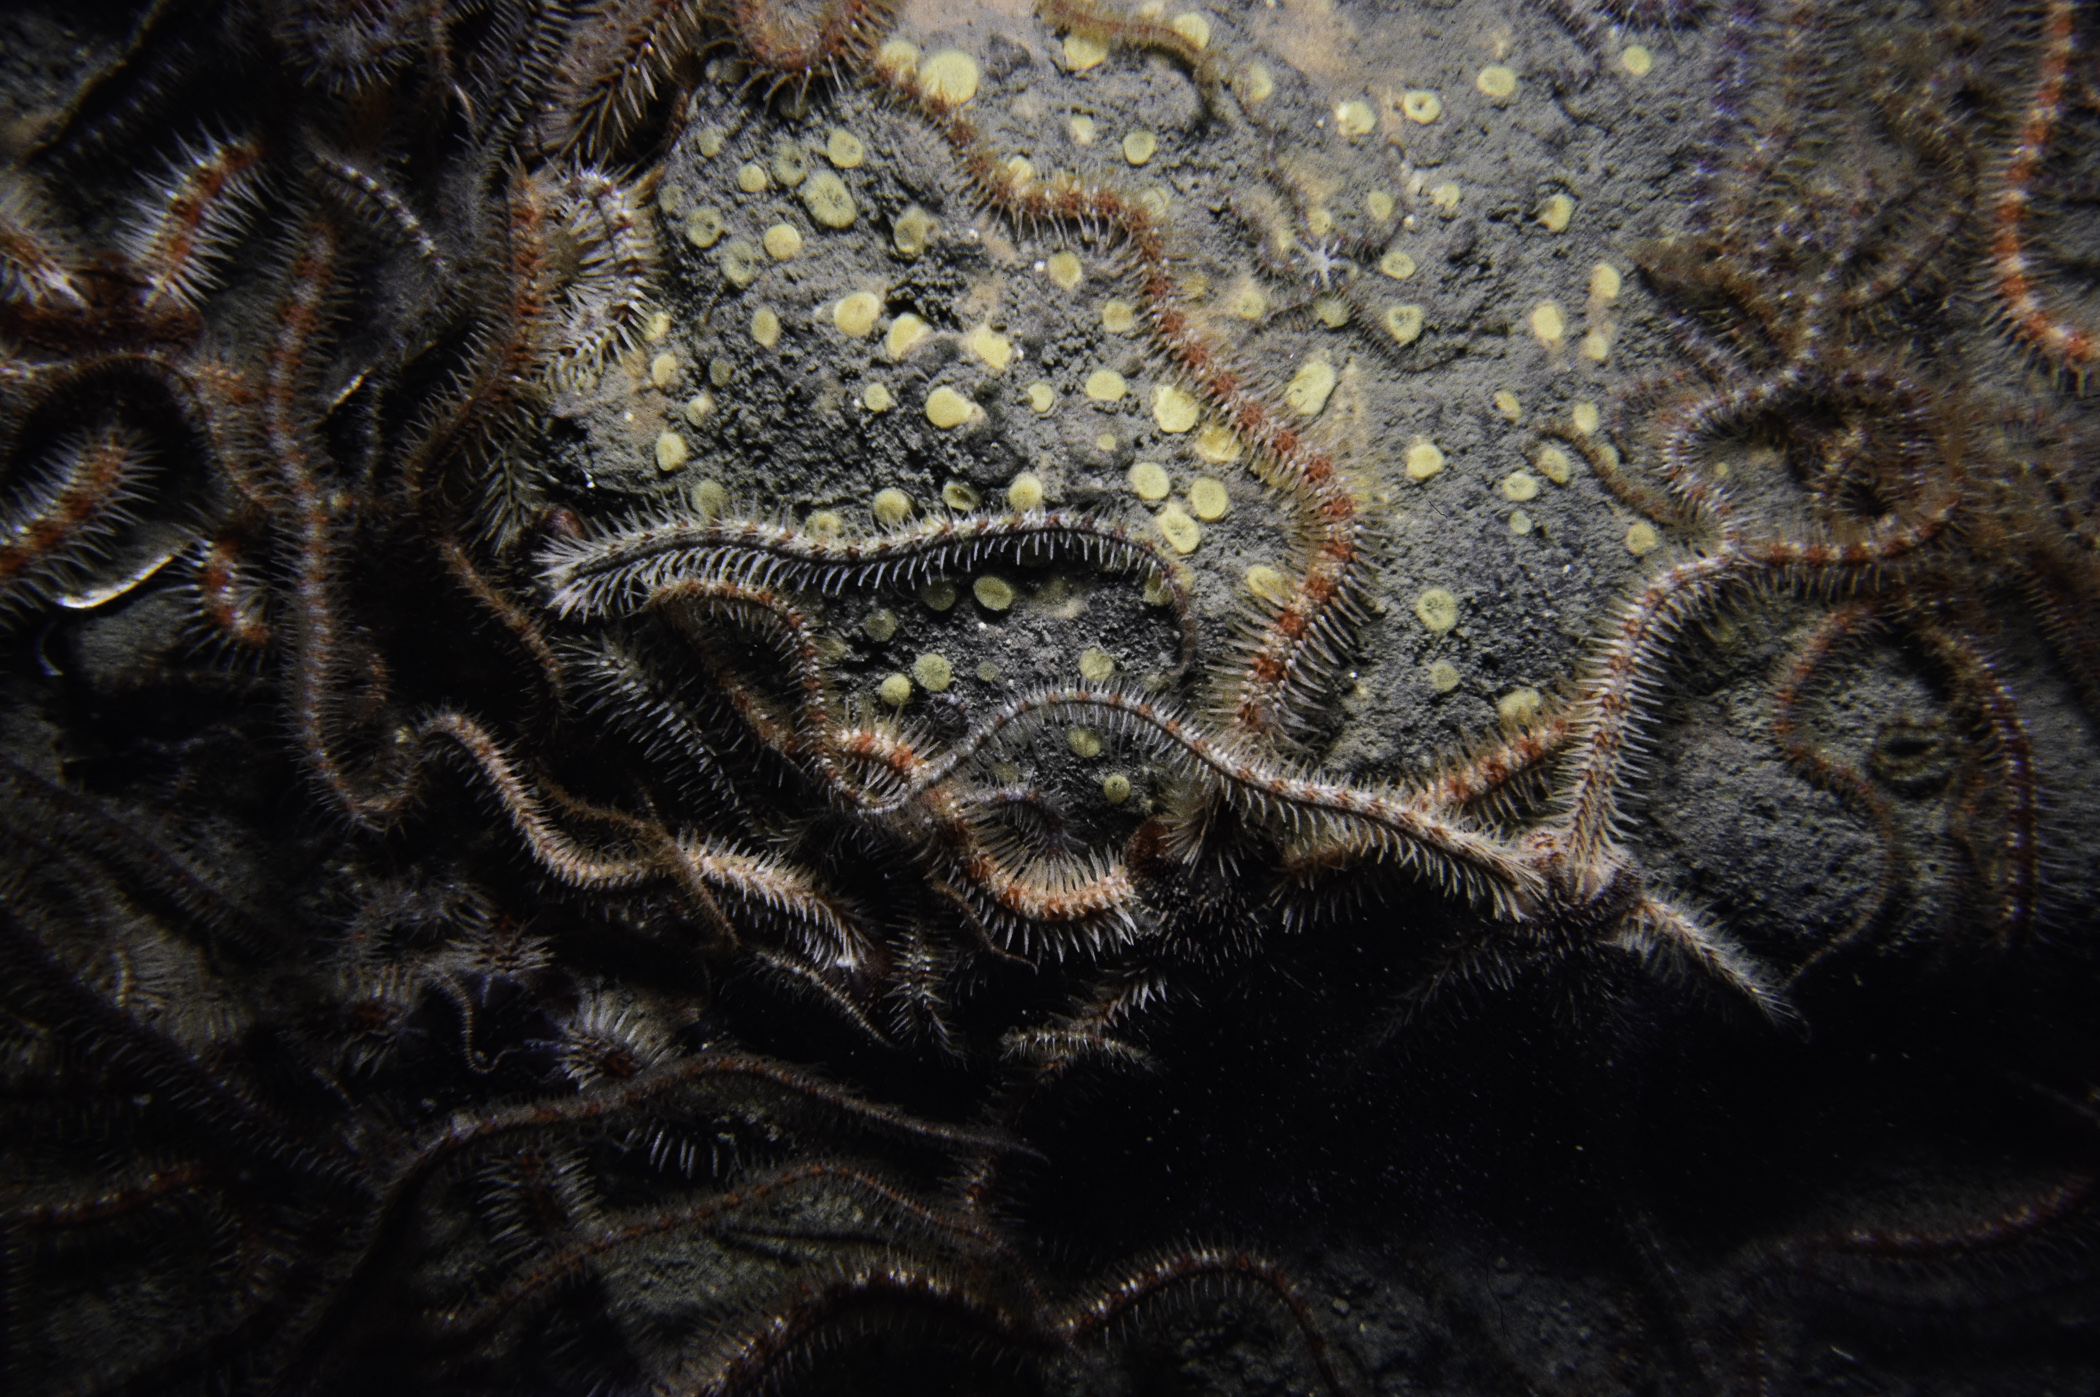 Cliona celata, Ophiothrix fragilis. Site: W of Colin Rock, Strangford Lough. 